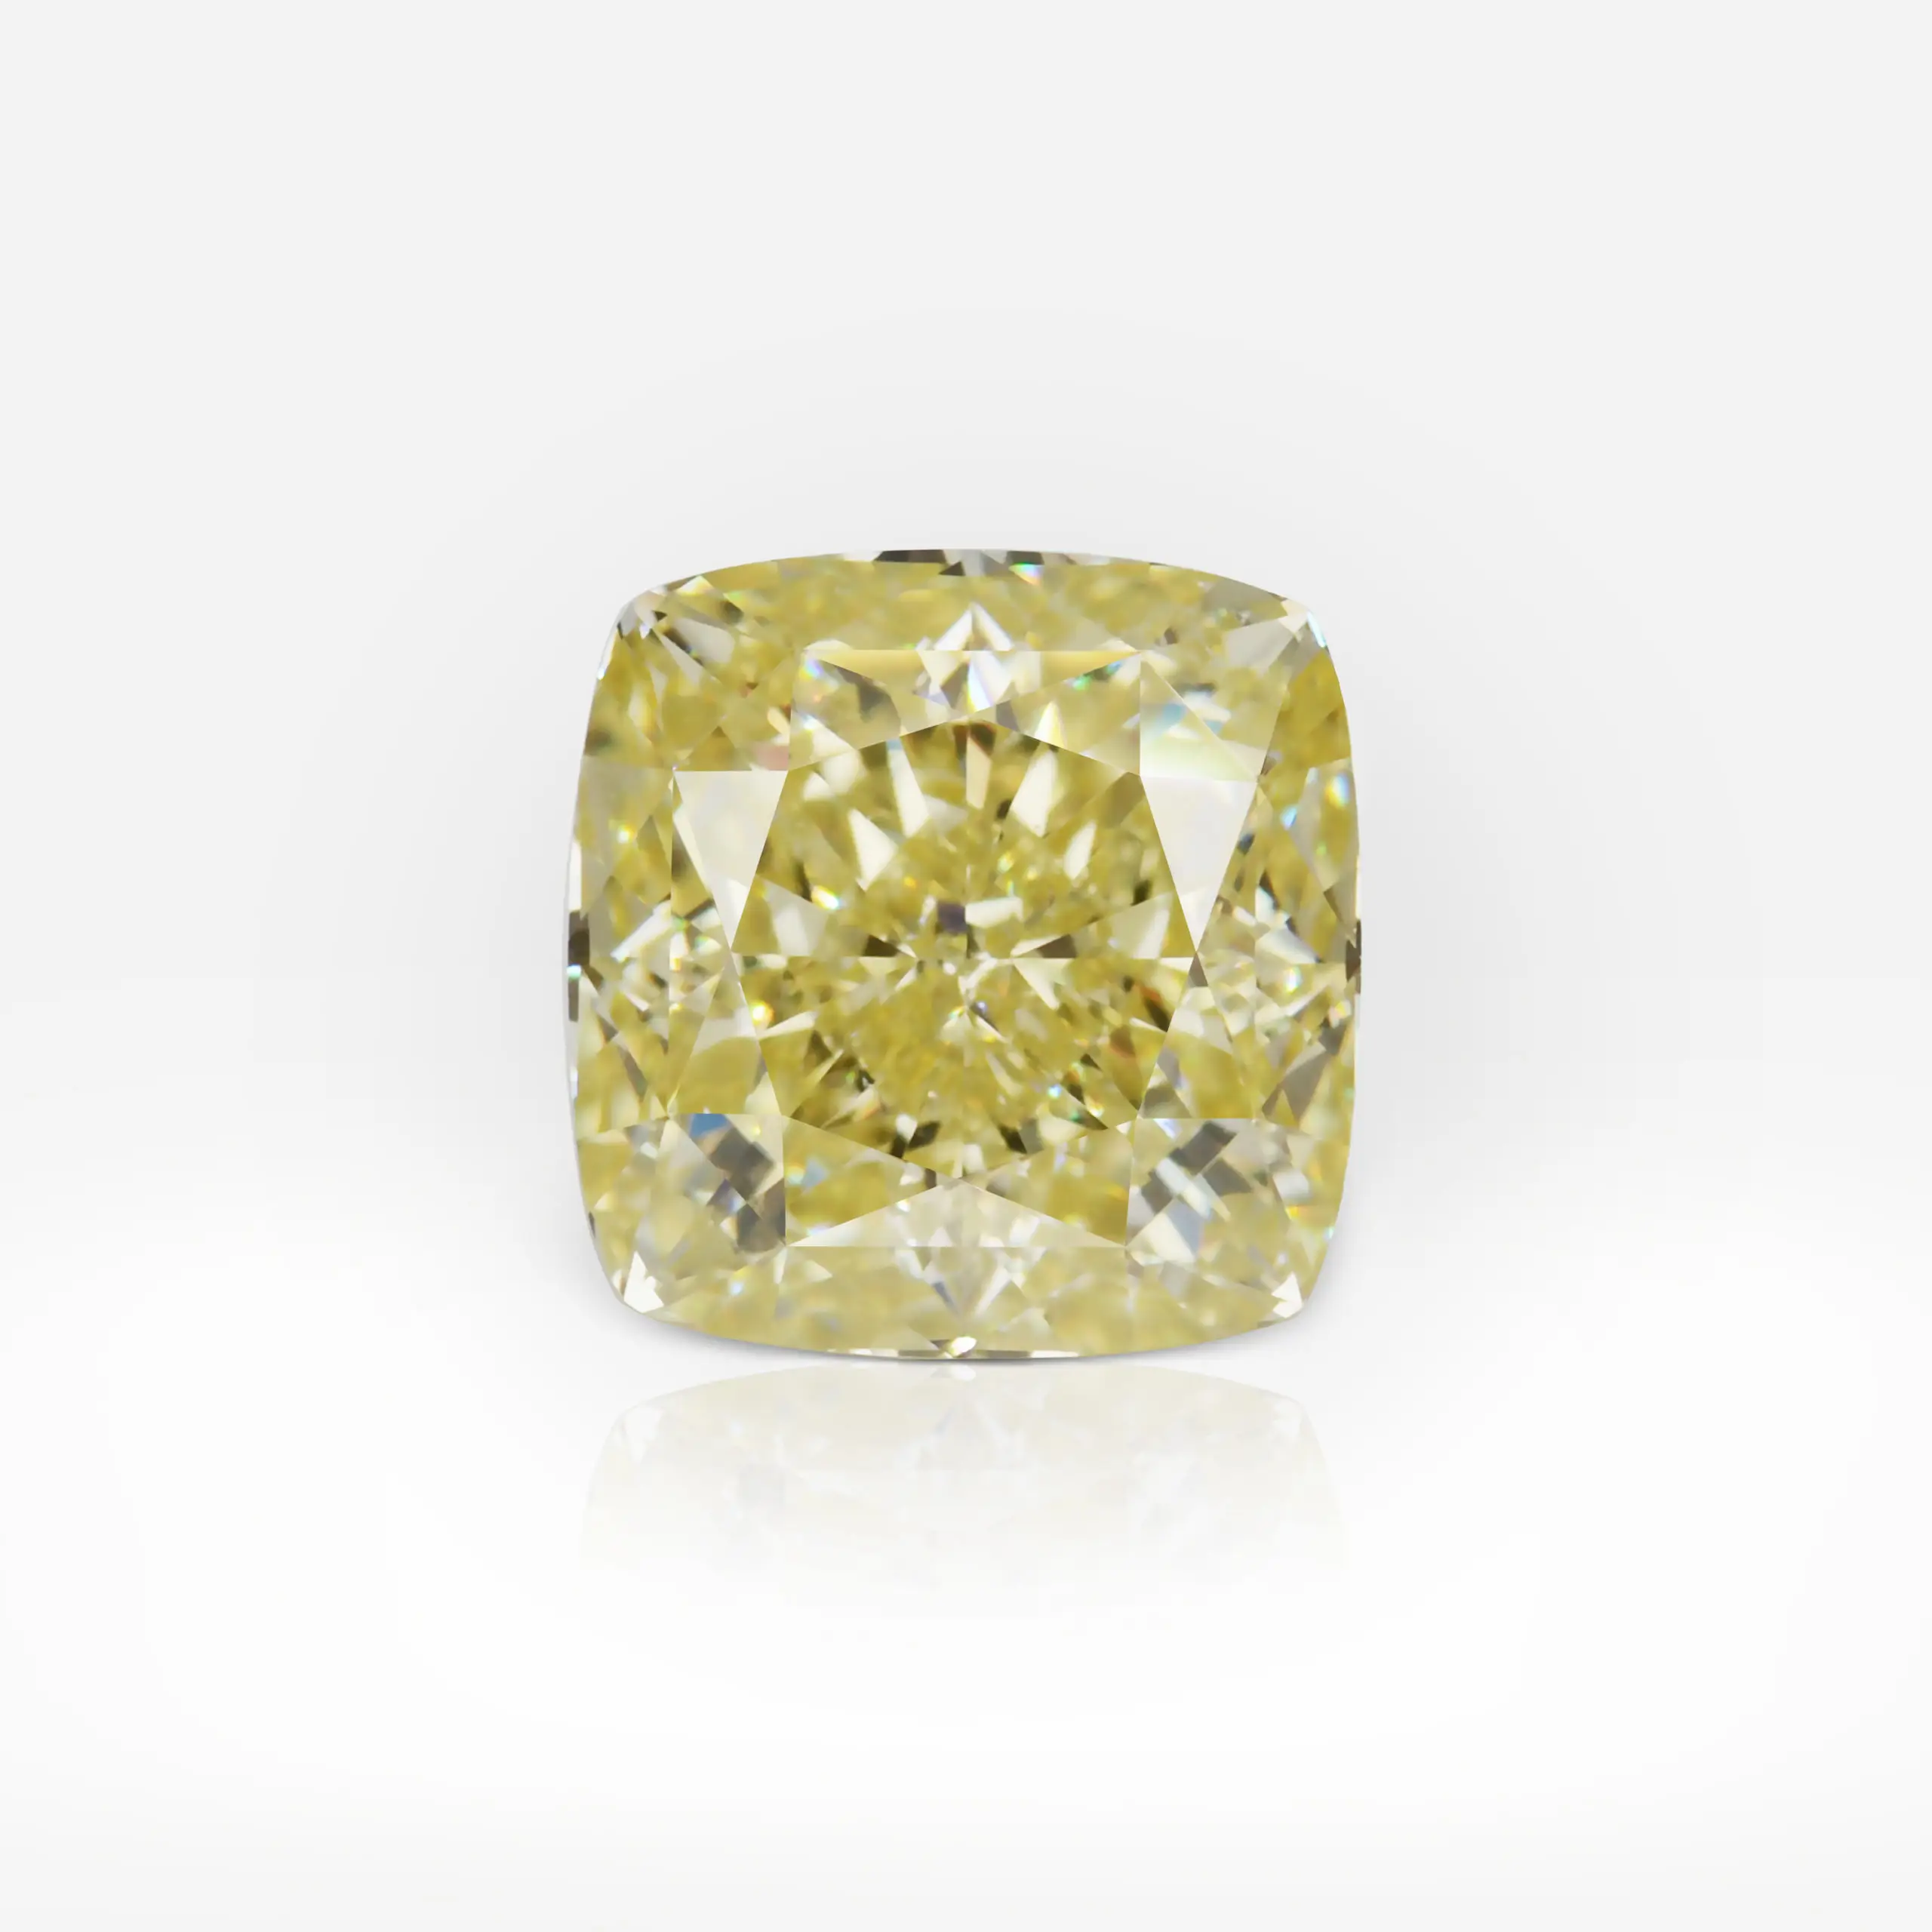 1.73 carat Fancy Yellow VS2 Cushion Shape Diamond GIA - picture 1